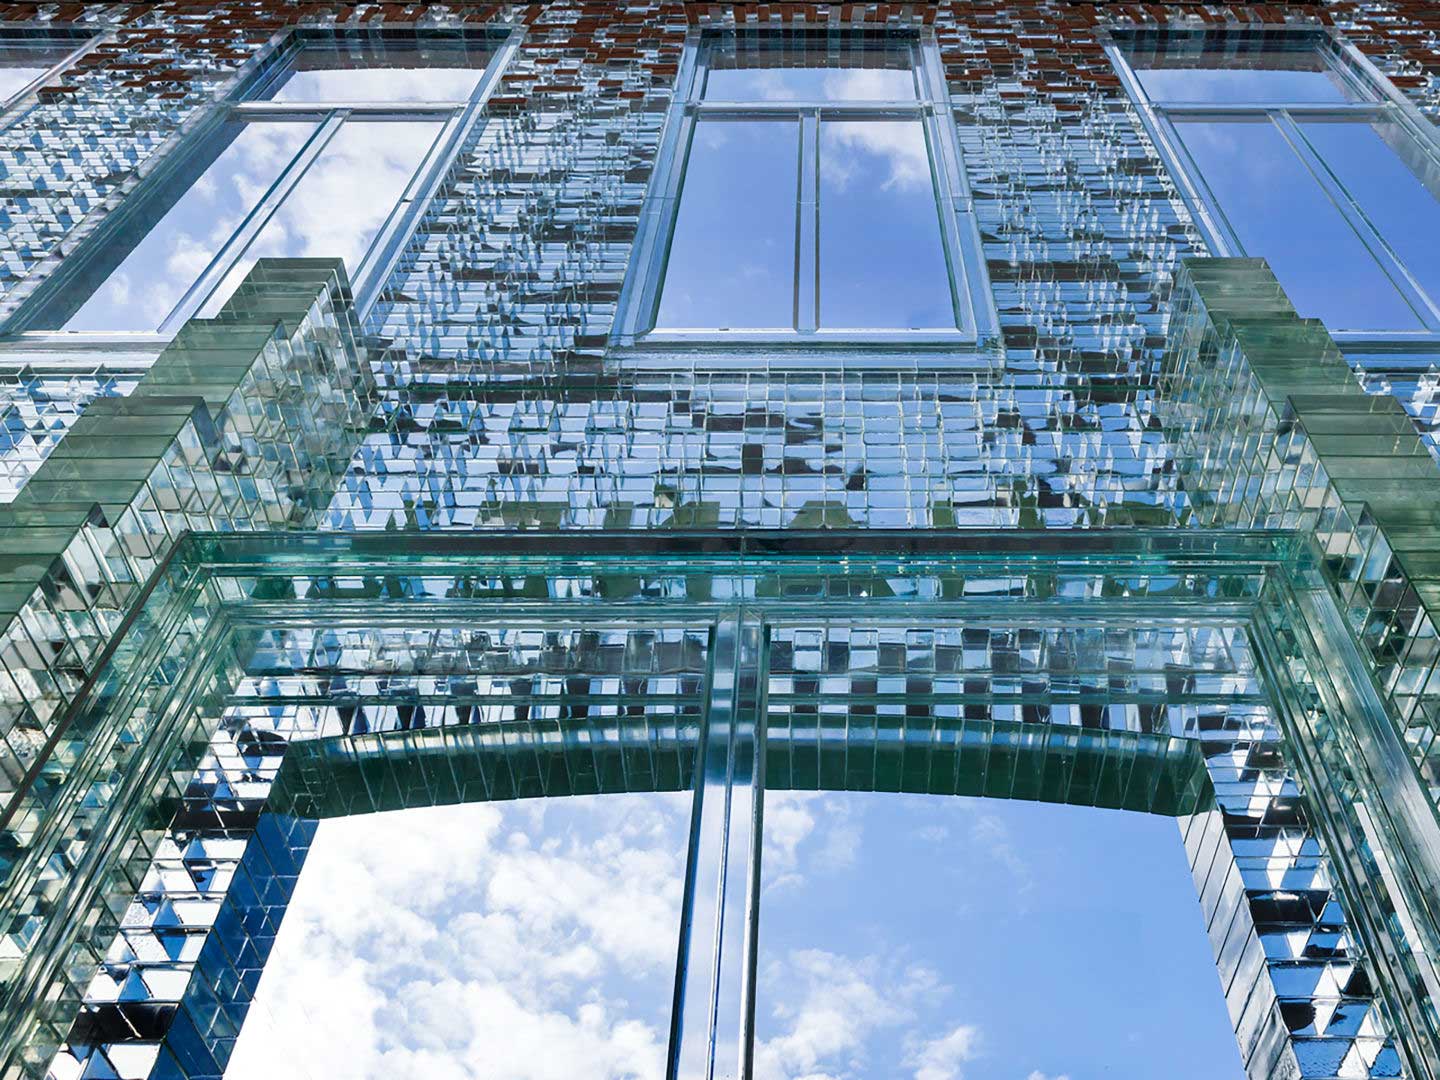 Casas de Cristal obra de arquitectura con mucho vidrio